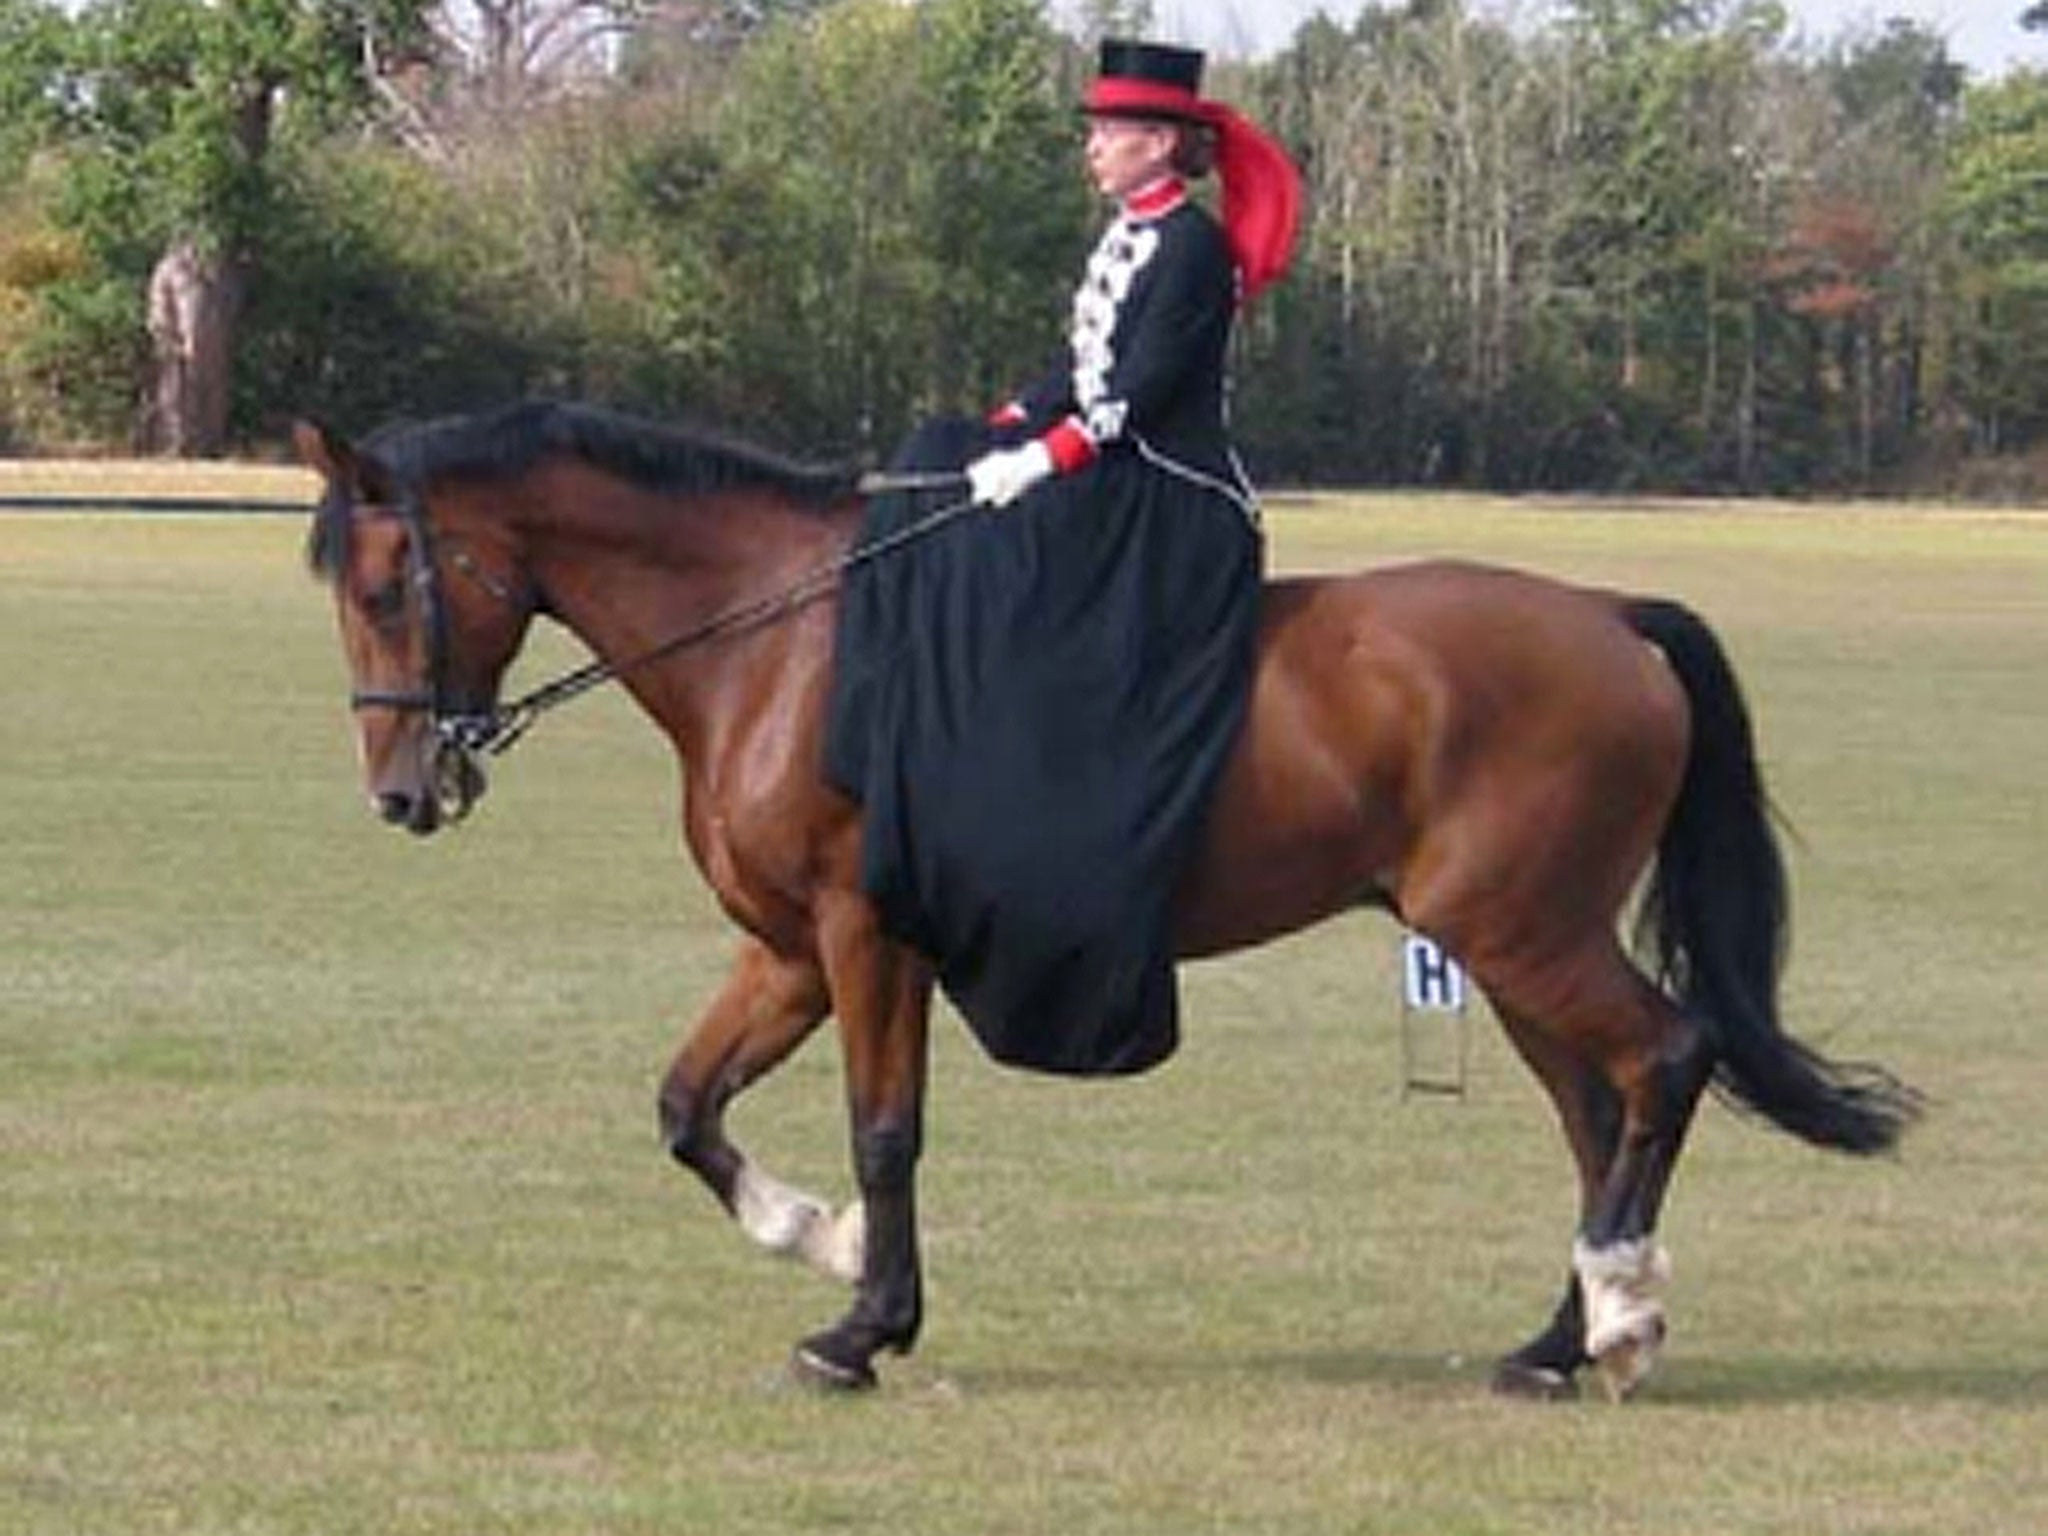 Sadie Hartley, 60, a keen horsewoman